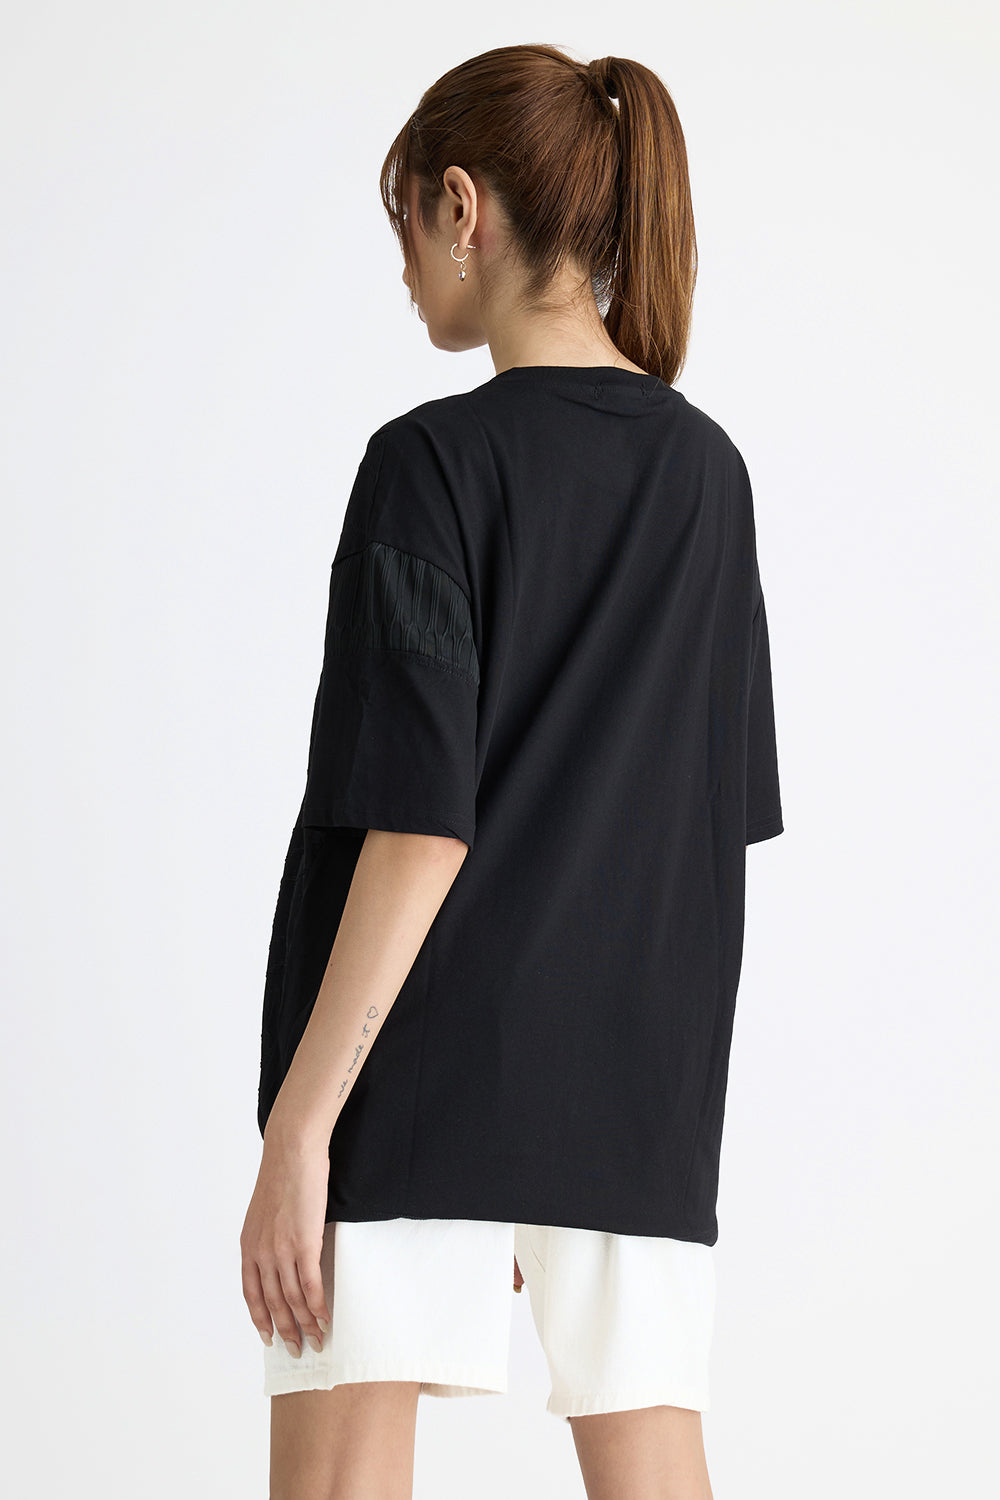 Carbon Casual Black T-shirt